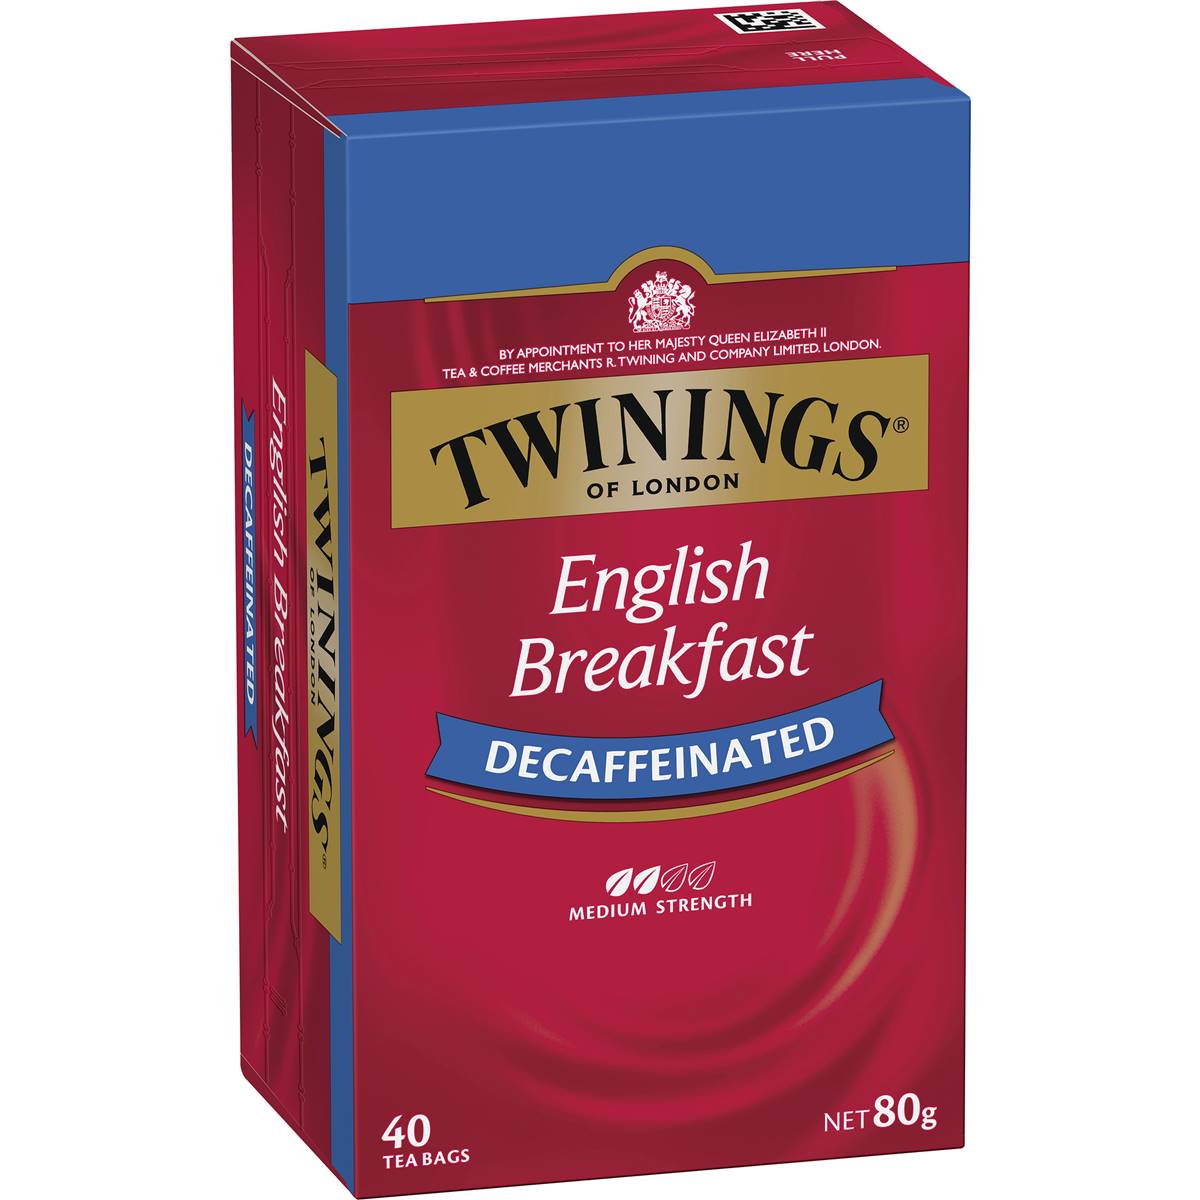 Calories in Twinings English Breakfast Decaffeinated Tea Bags